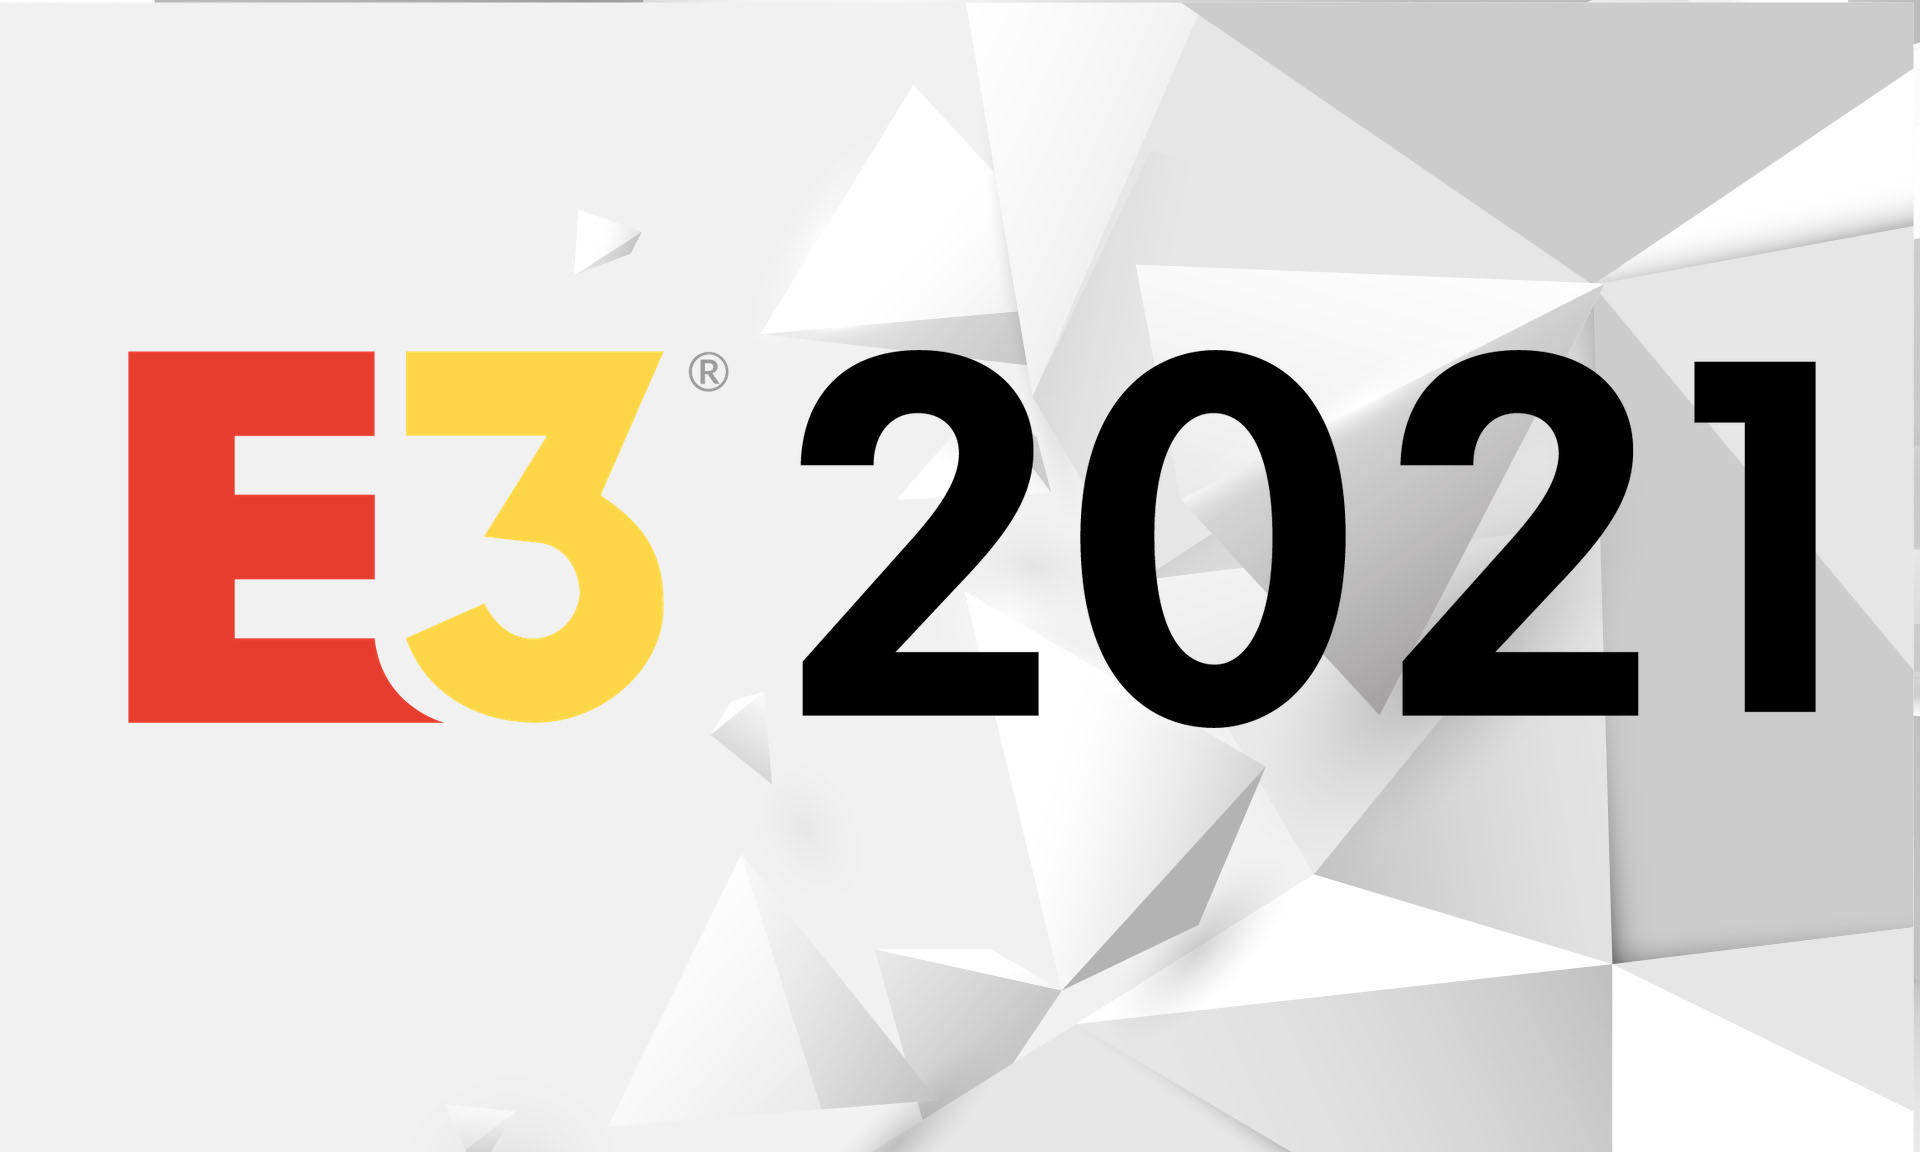 Stanley|E3 2021首批参展商公开 索尼仍未表态